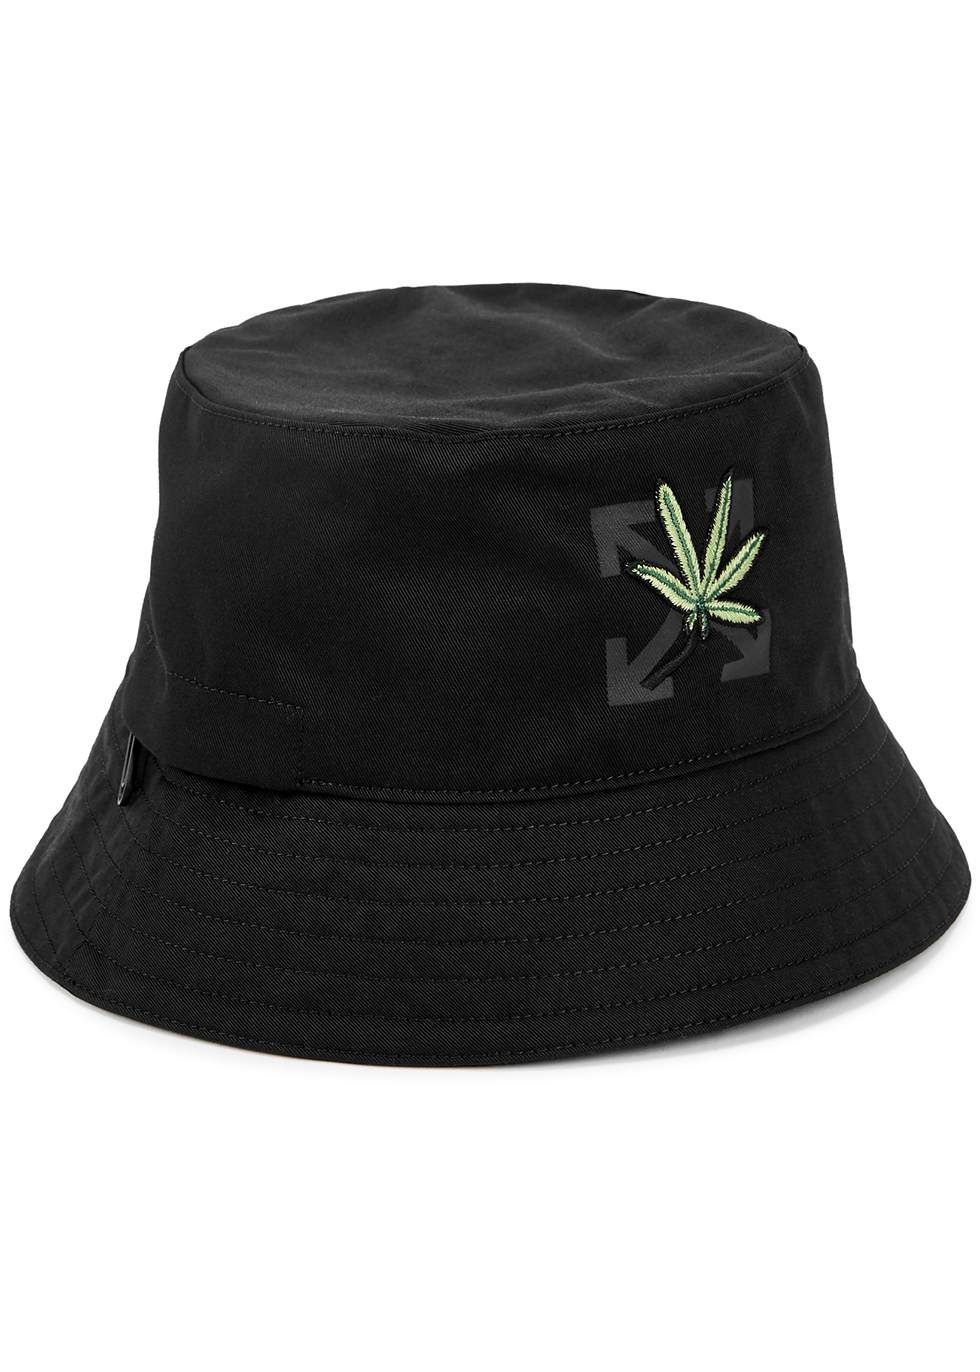 Weed Arrow black cotton bucket hat